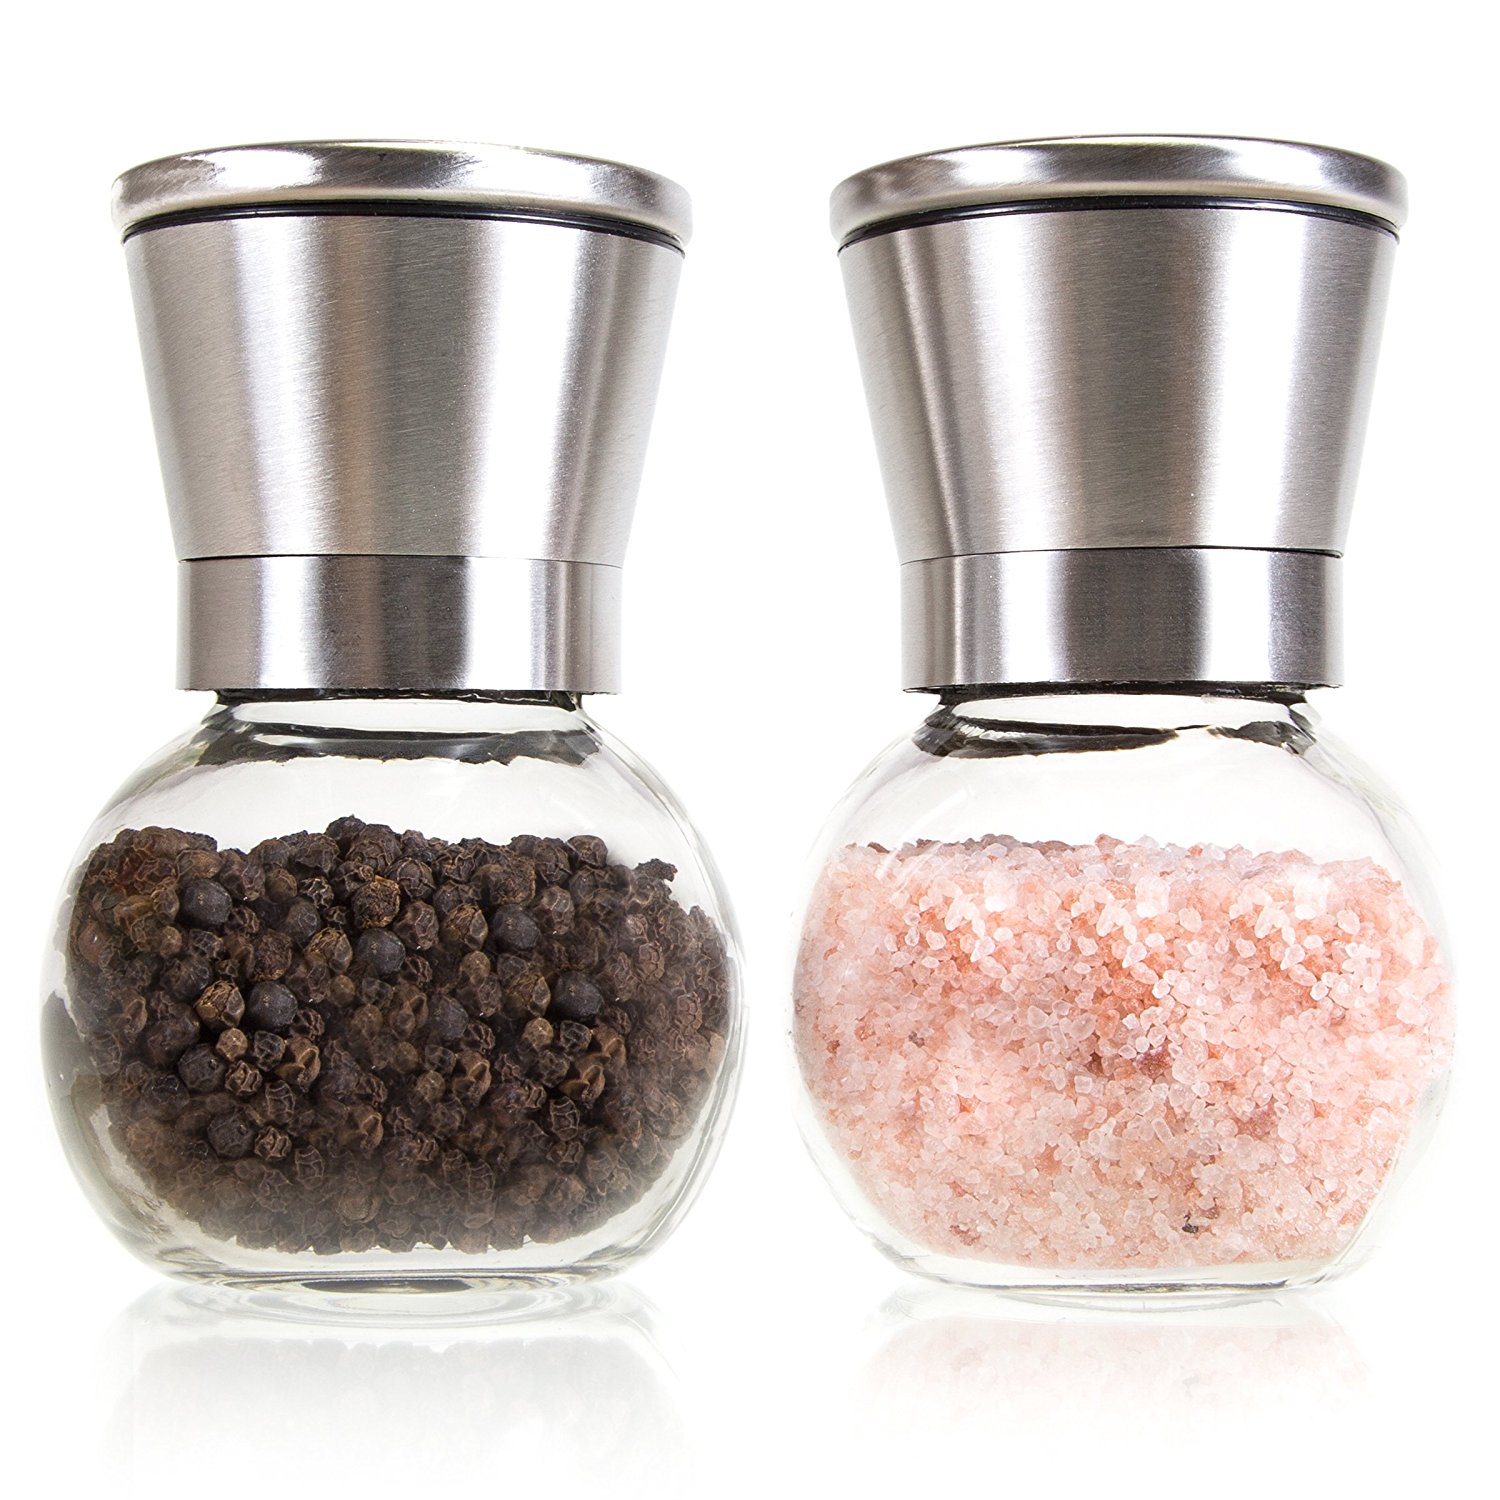 Amazon.com: Simple Kitchen Products Ergonomic Stainless Steel Salt ...